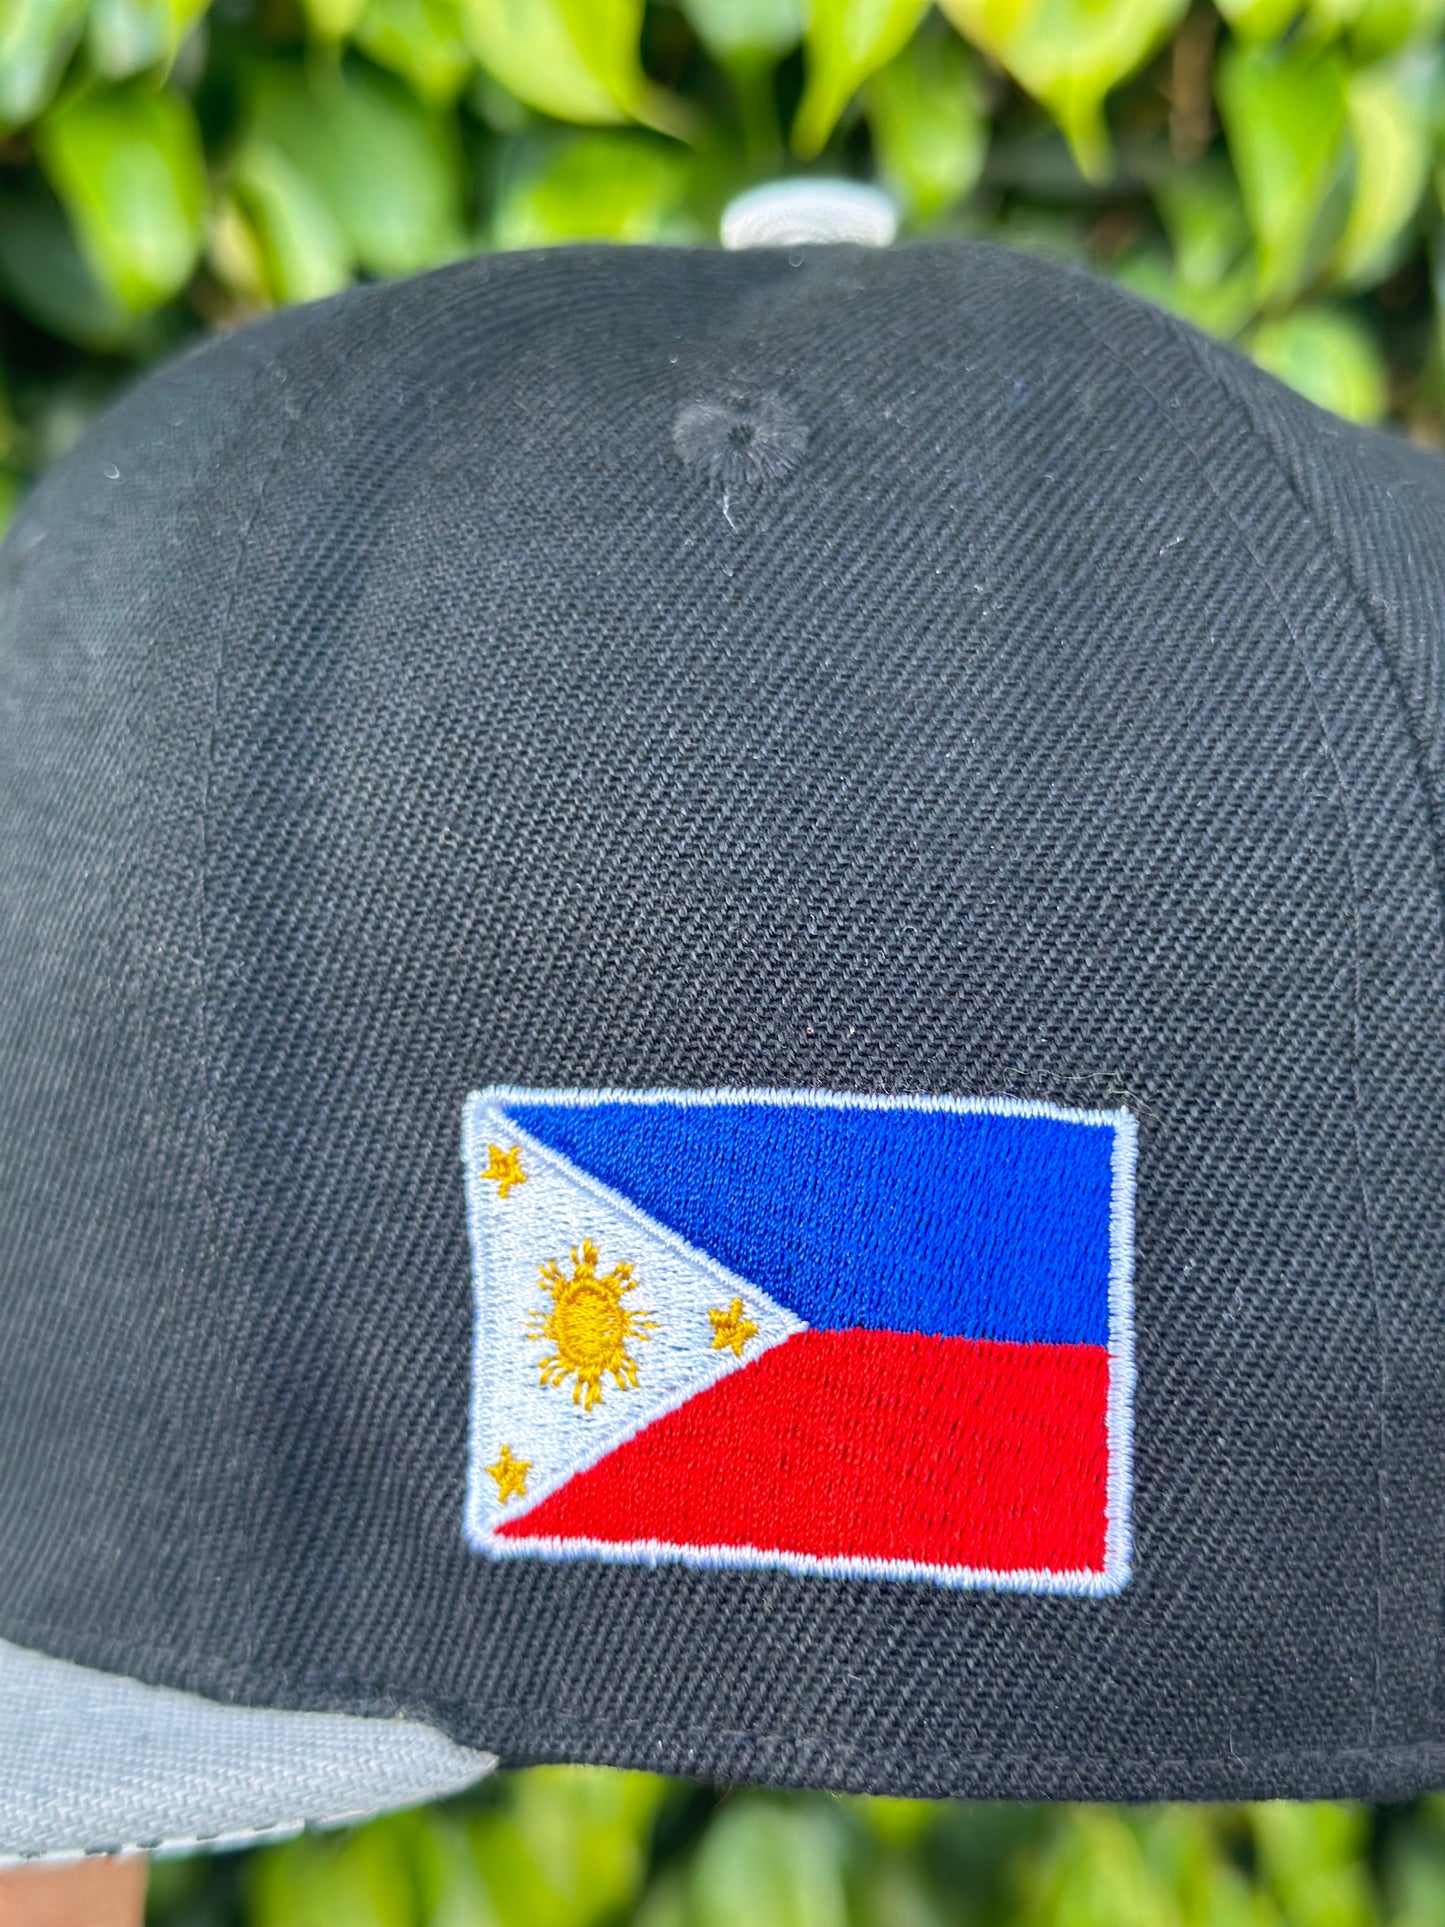 “LA KINGS” Filipino Heritage Night Philippines Snap Back Hat